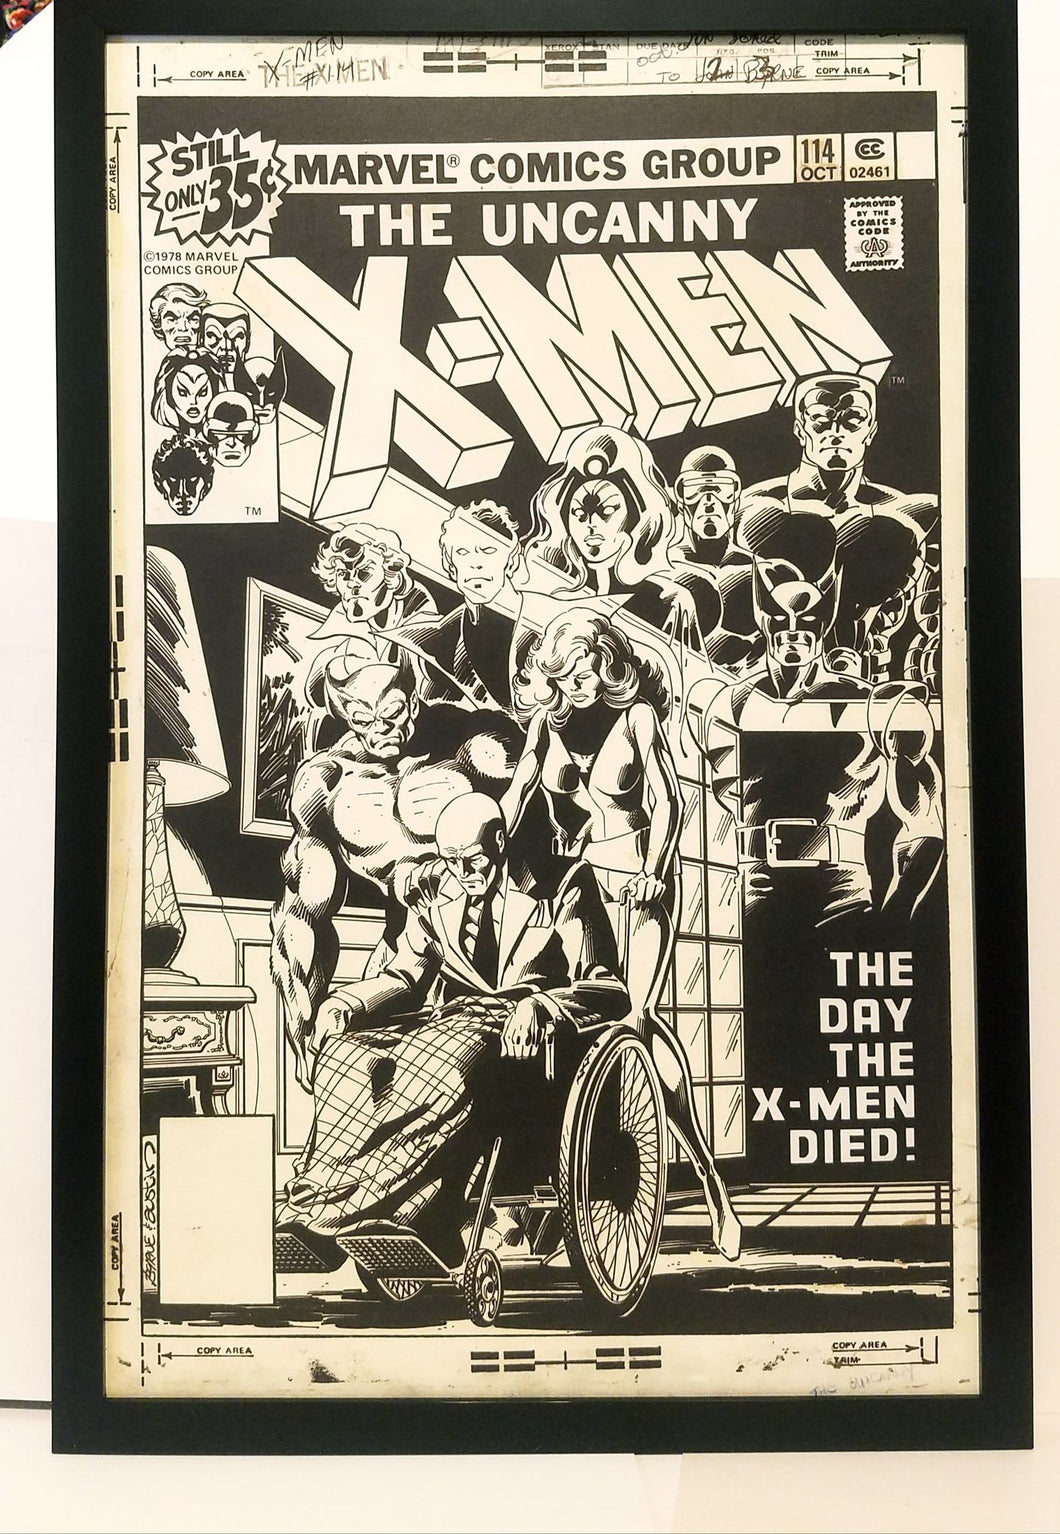 Uncanny X-Men #114 by John Byrne 11x17 FRAMED Original Art Poster Marvel Comics